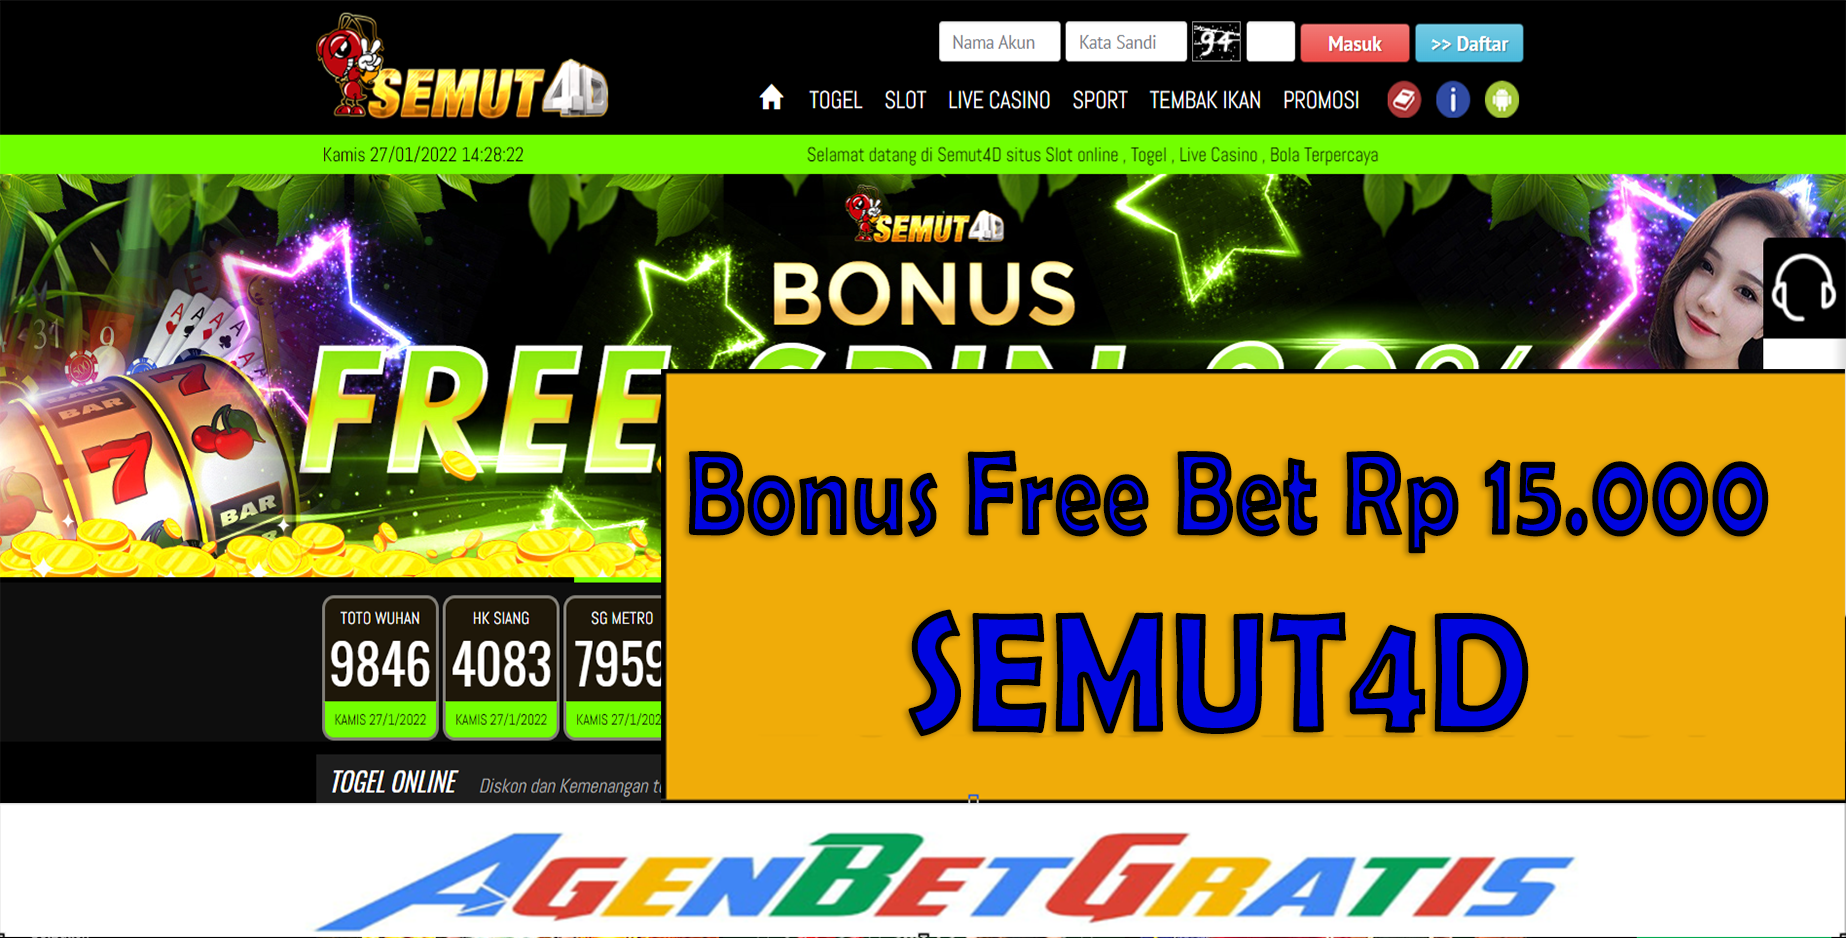 SEMUT4D - Bonus FreeBet 15.000